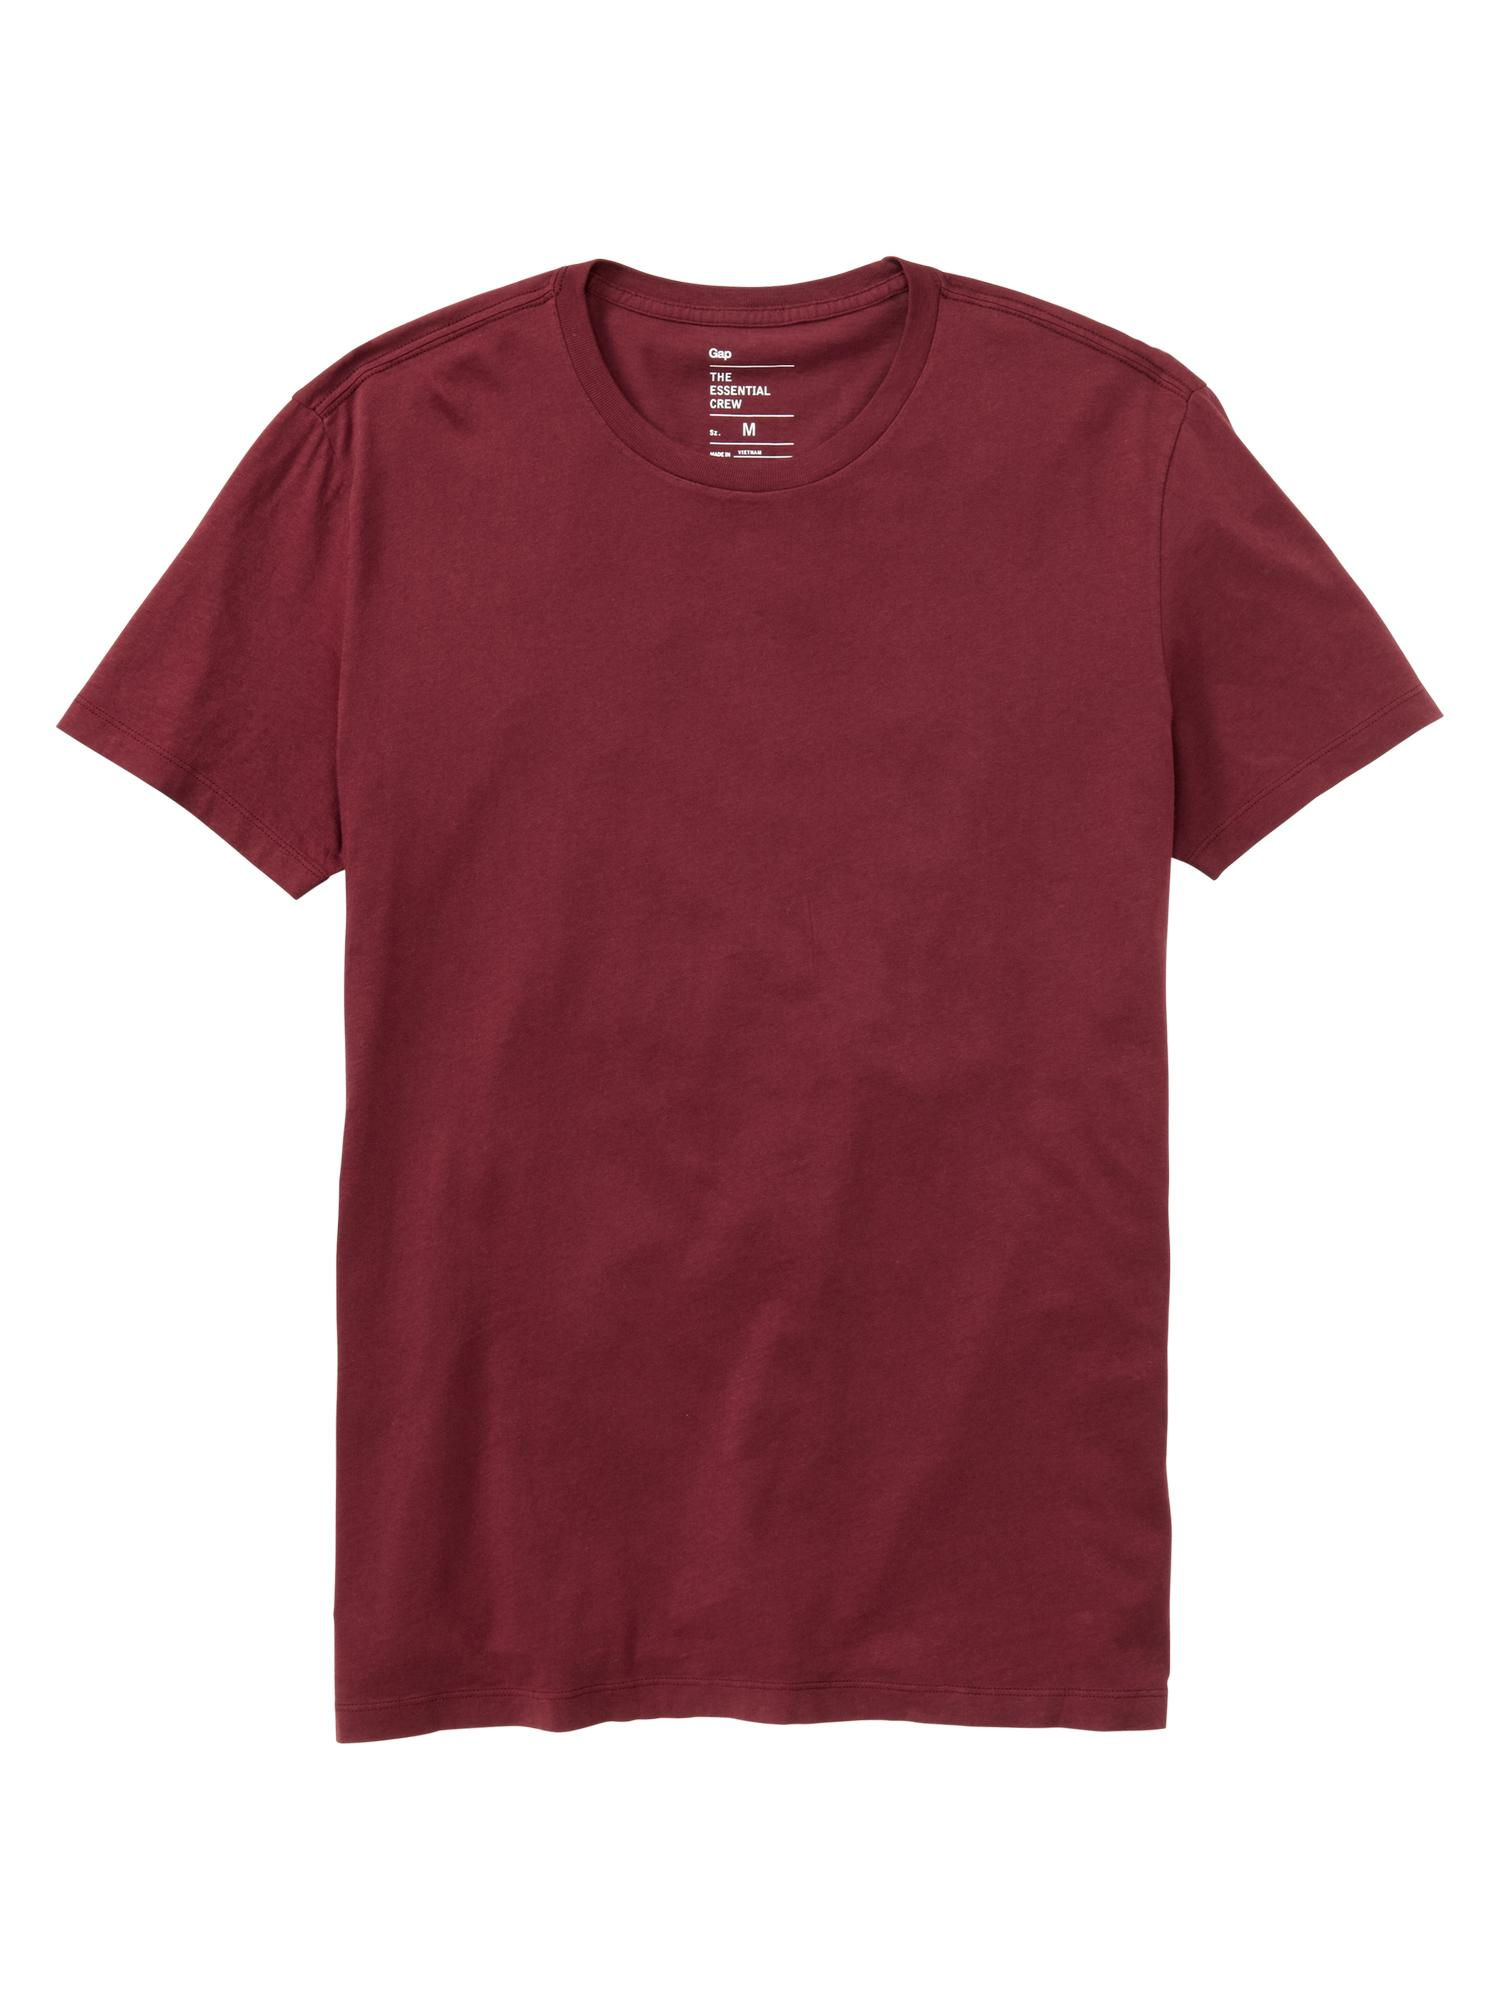 Gap Essential Crewneck T-shirt in Purple for Men - Lyst